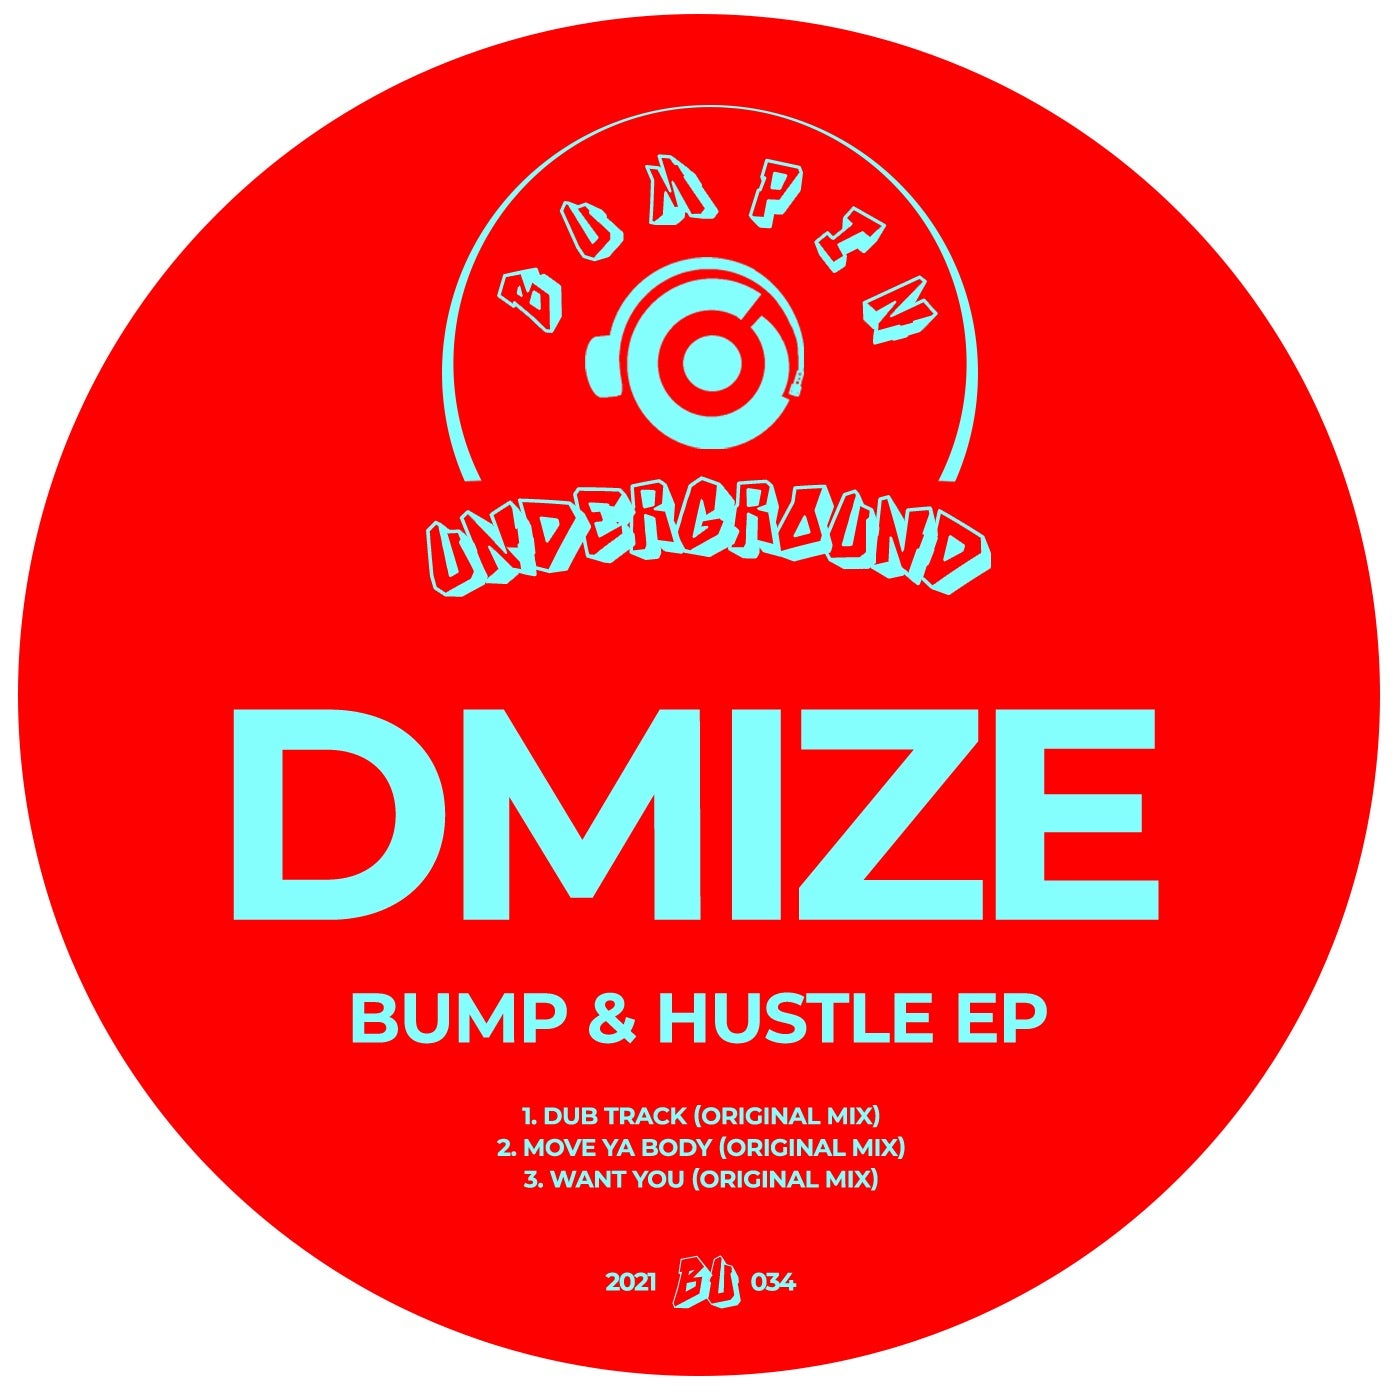 Bump & Hustle EP